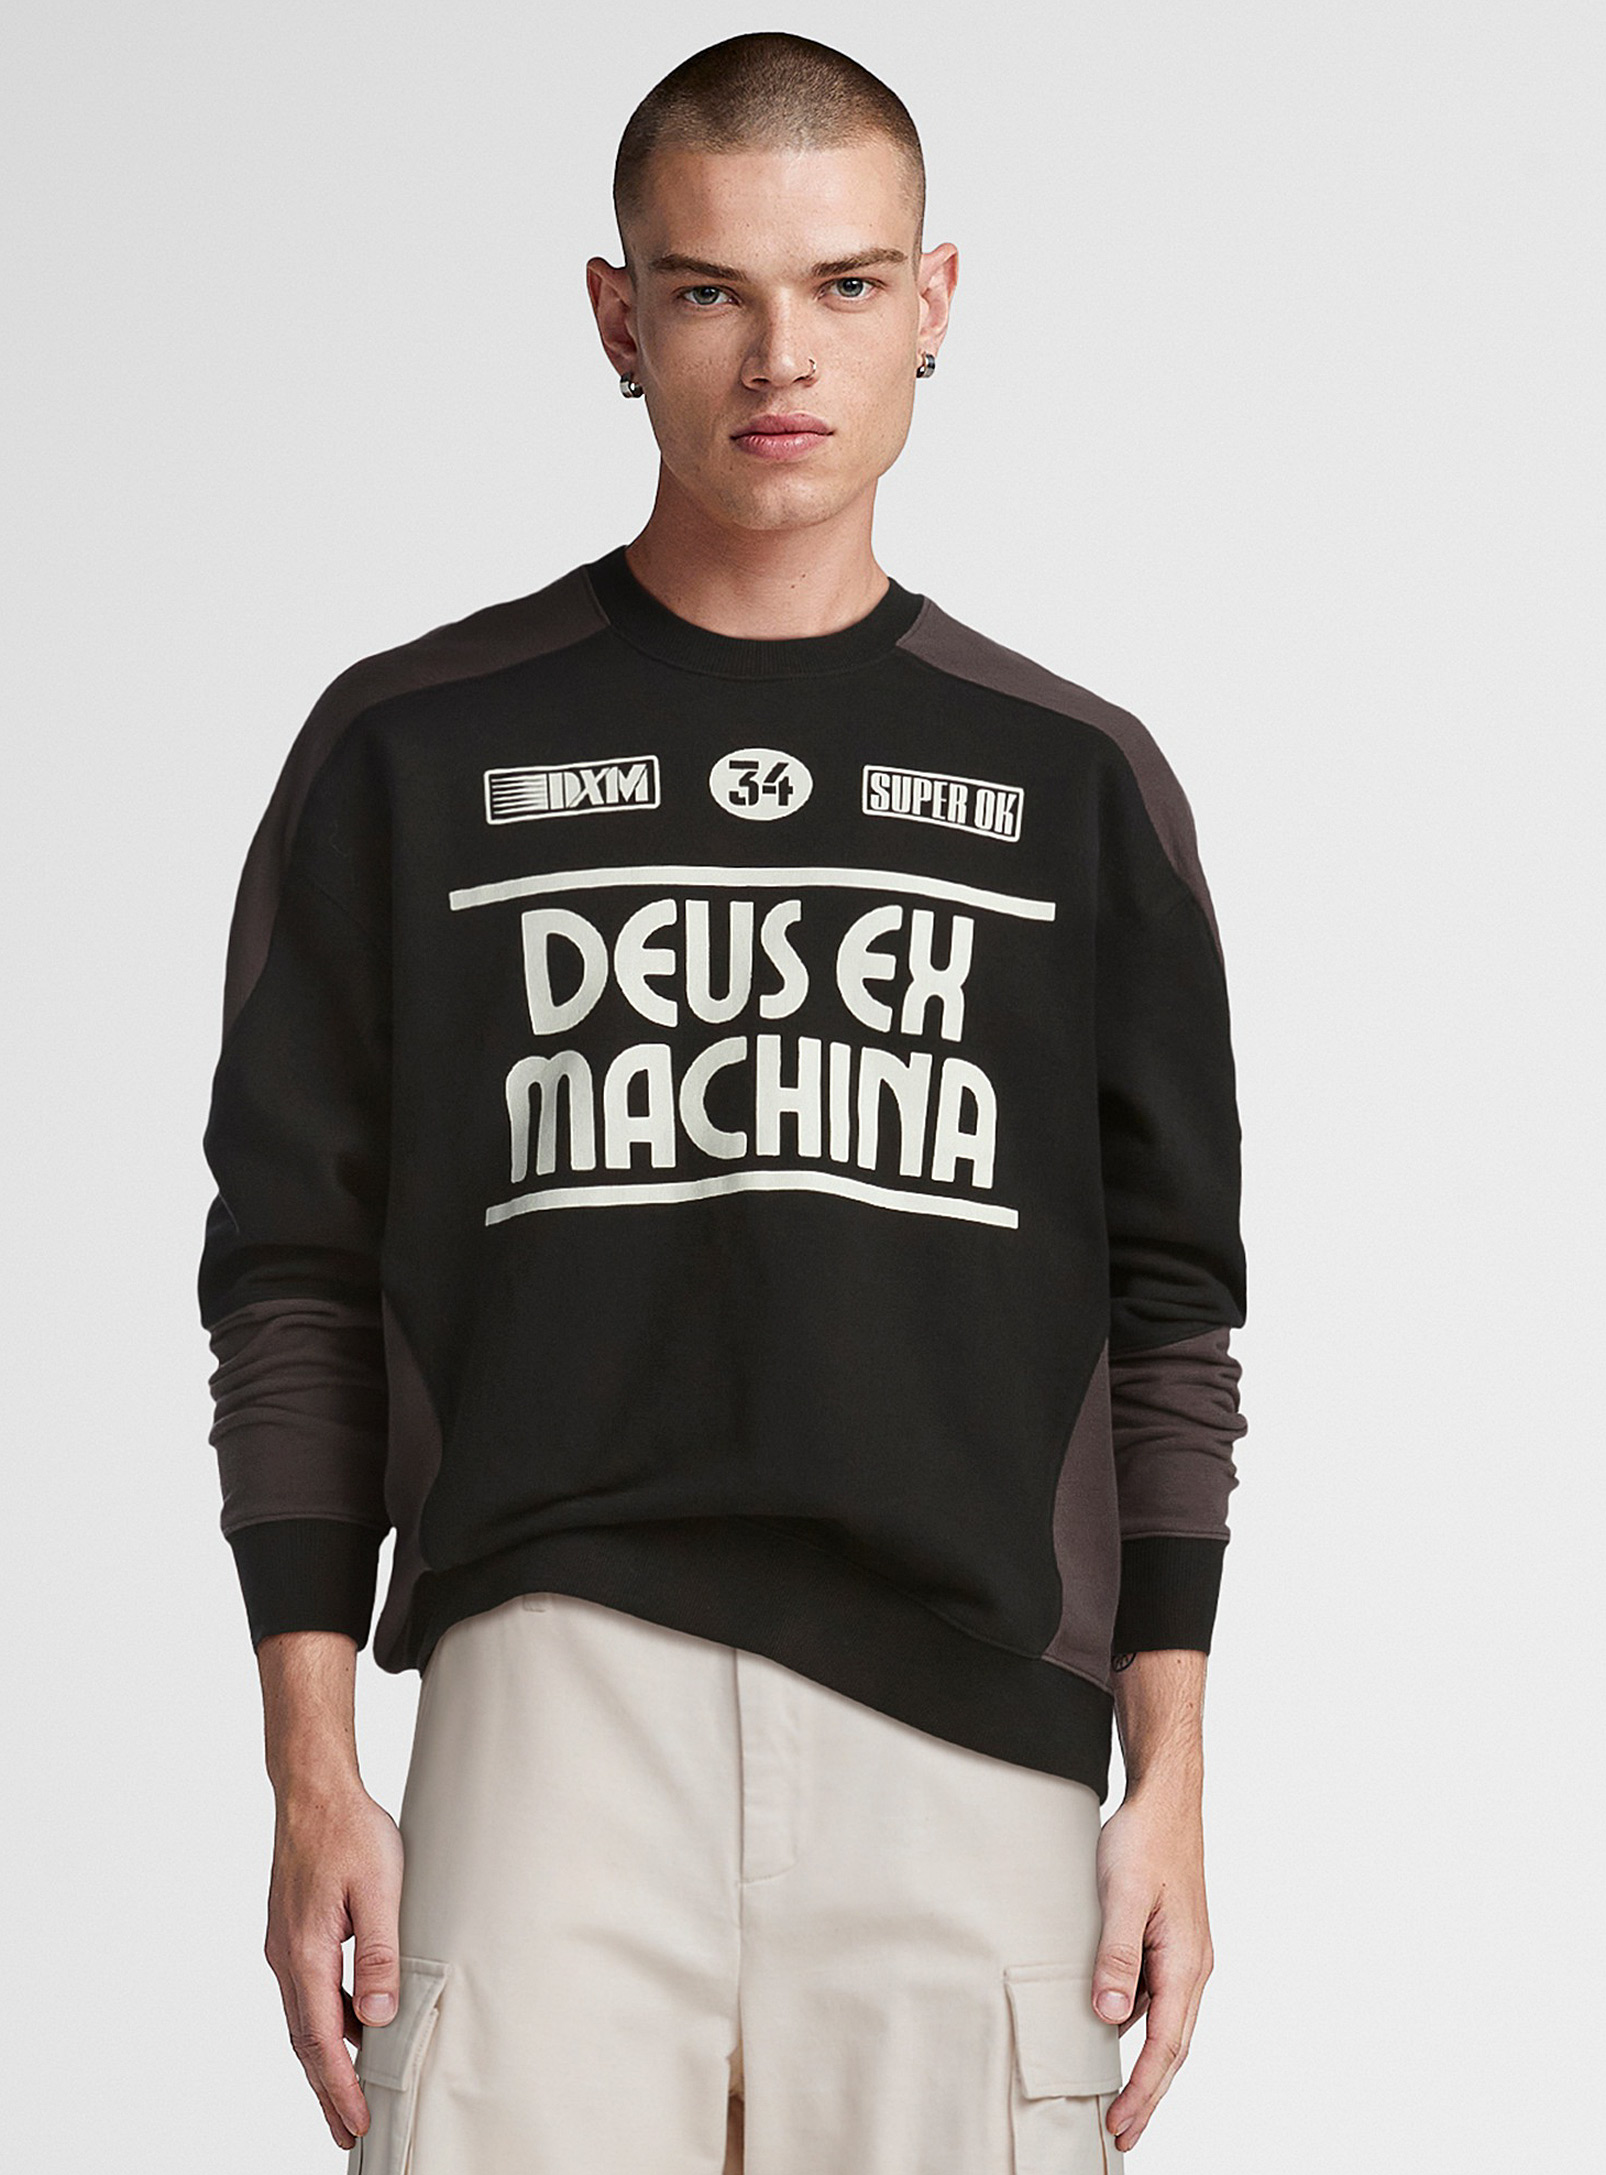 Deus - Men's Two-tone printed sweatshirt